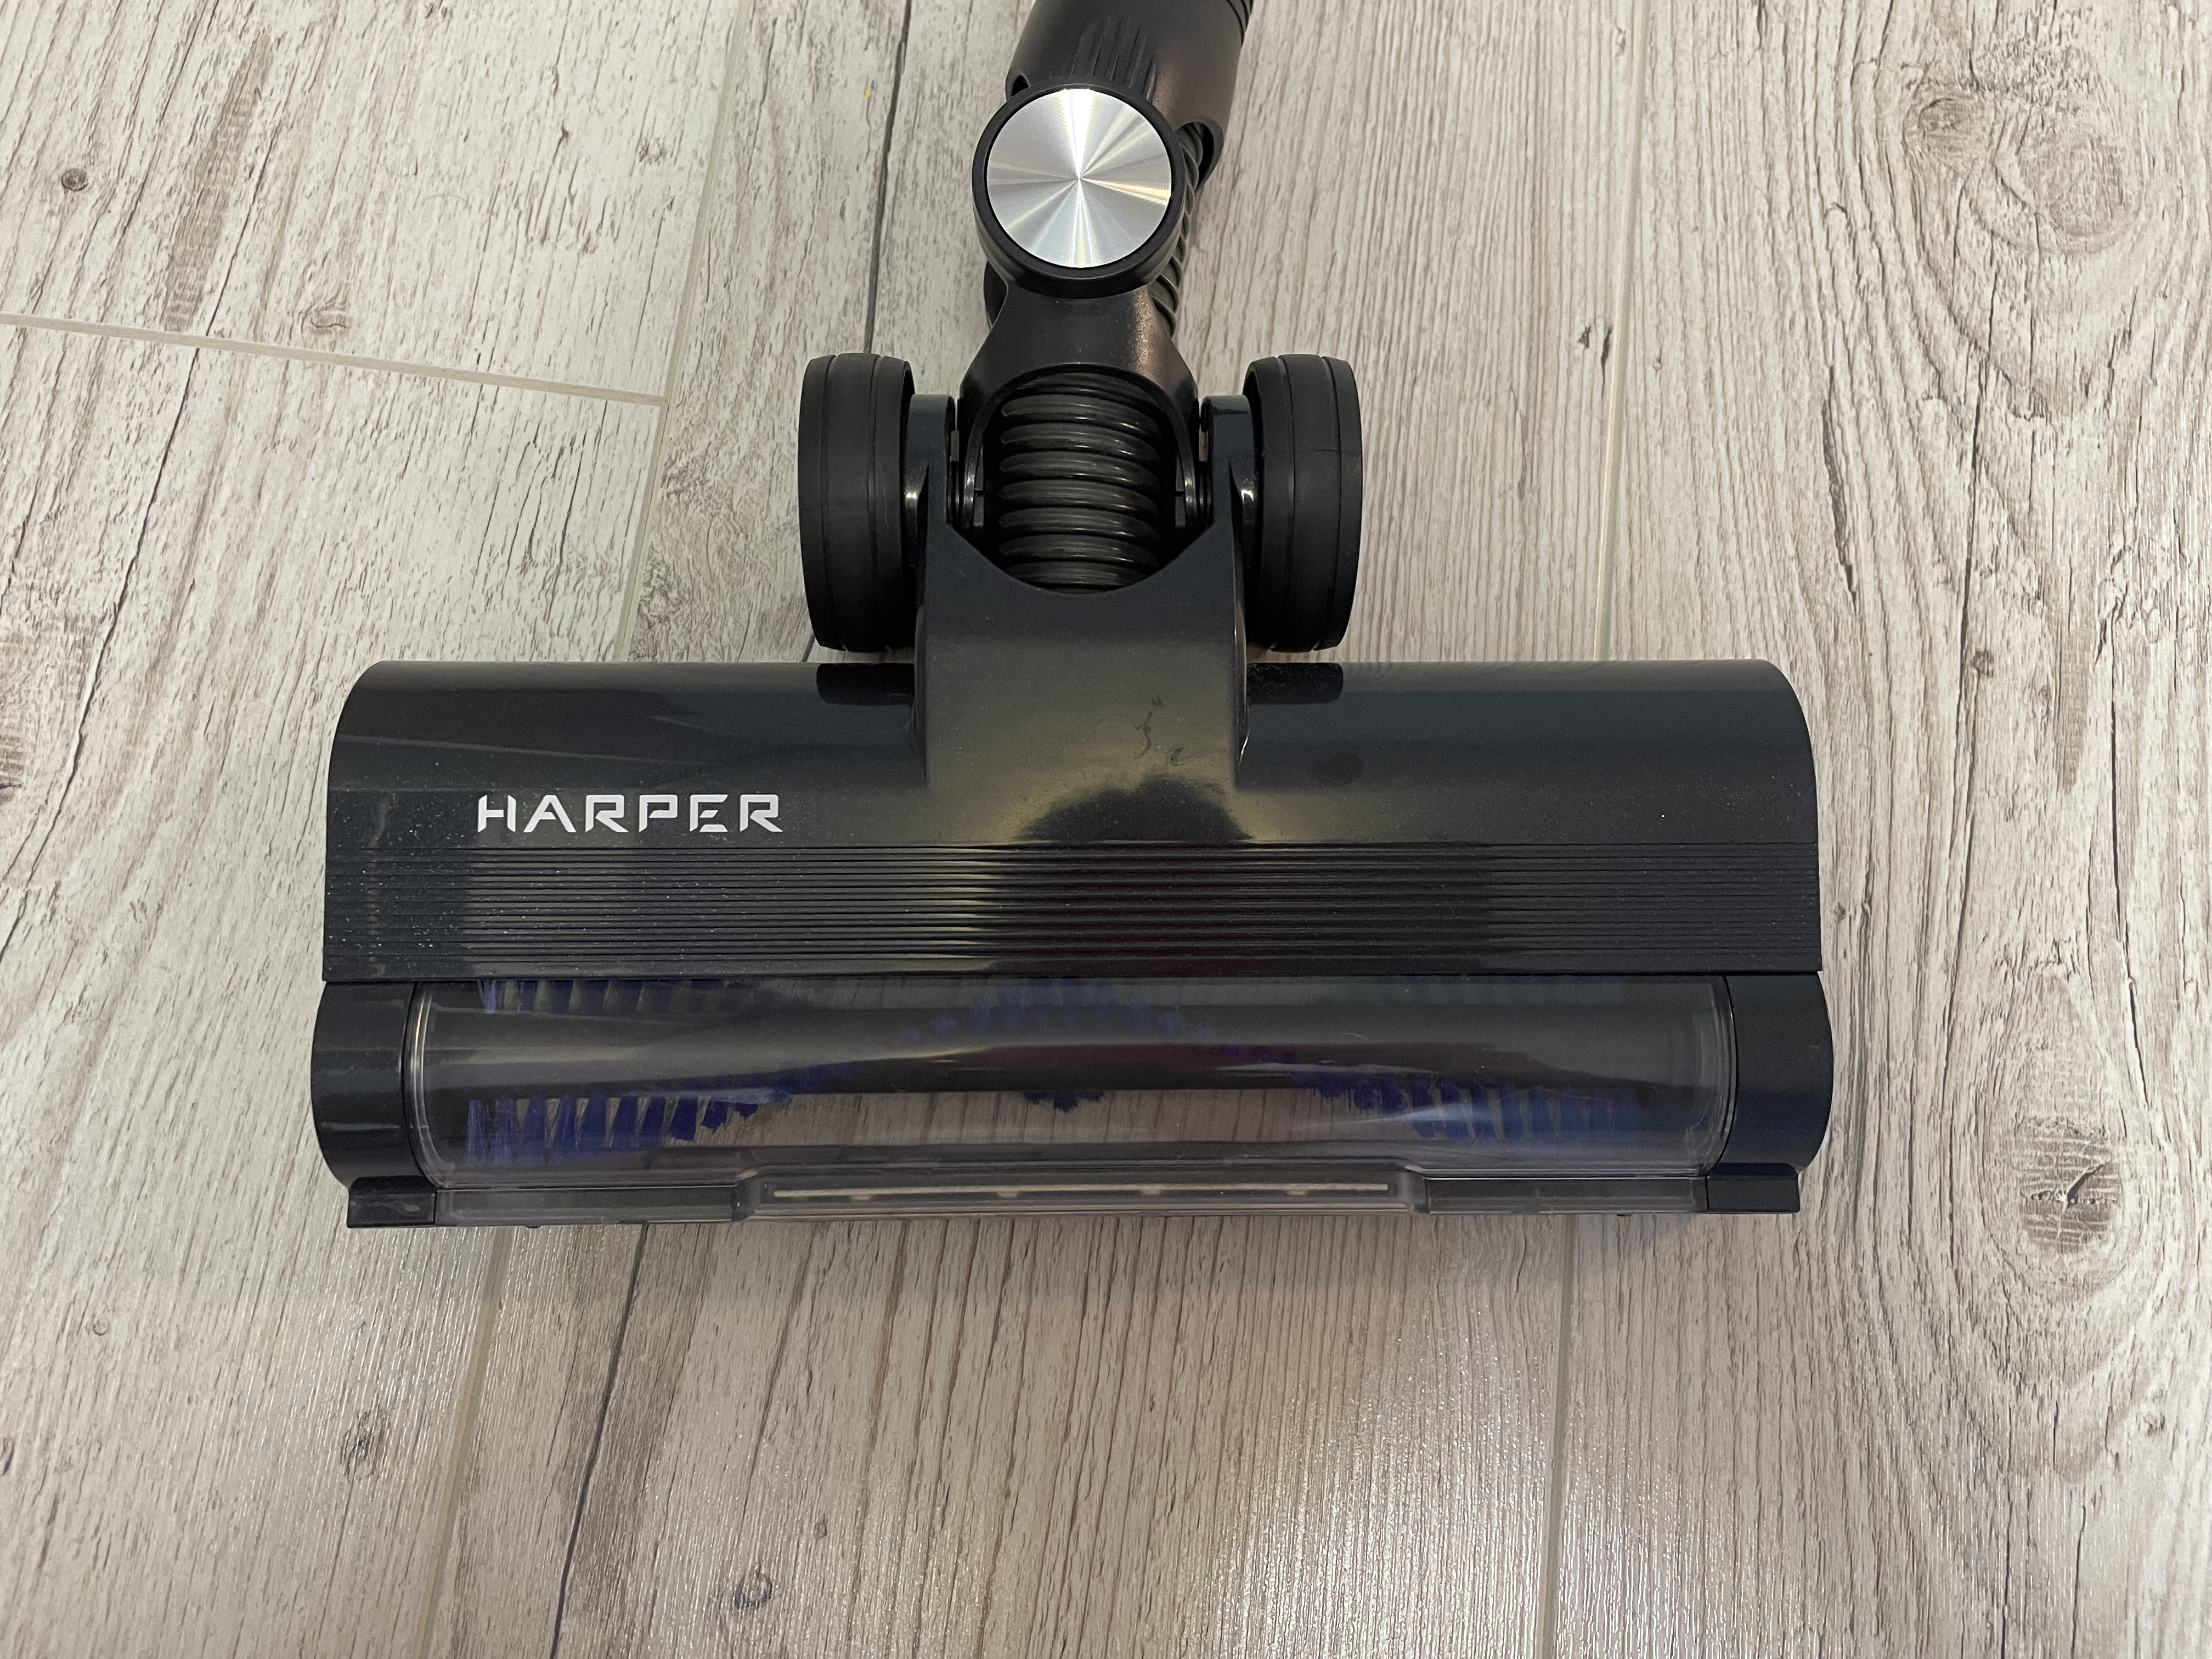 Haier пылесос беспроводной вертикальный. Вертикальный пылесос Haier hvc250. Держатель для беспроводного пылесоса Haier hvc400 h. Haier пылесос вертикальный беспроводной HVC 250 фильтр. HVC-04 Vacuum Cleaner Gray Blue.